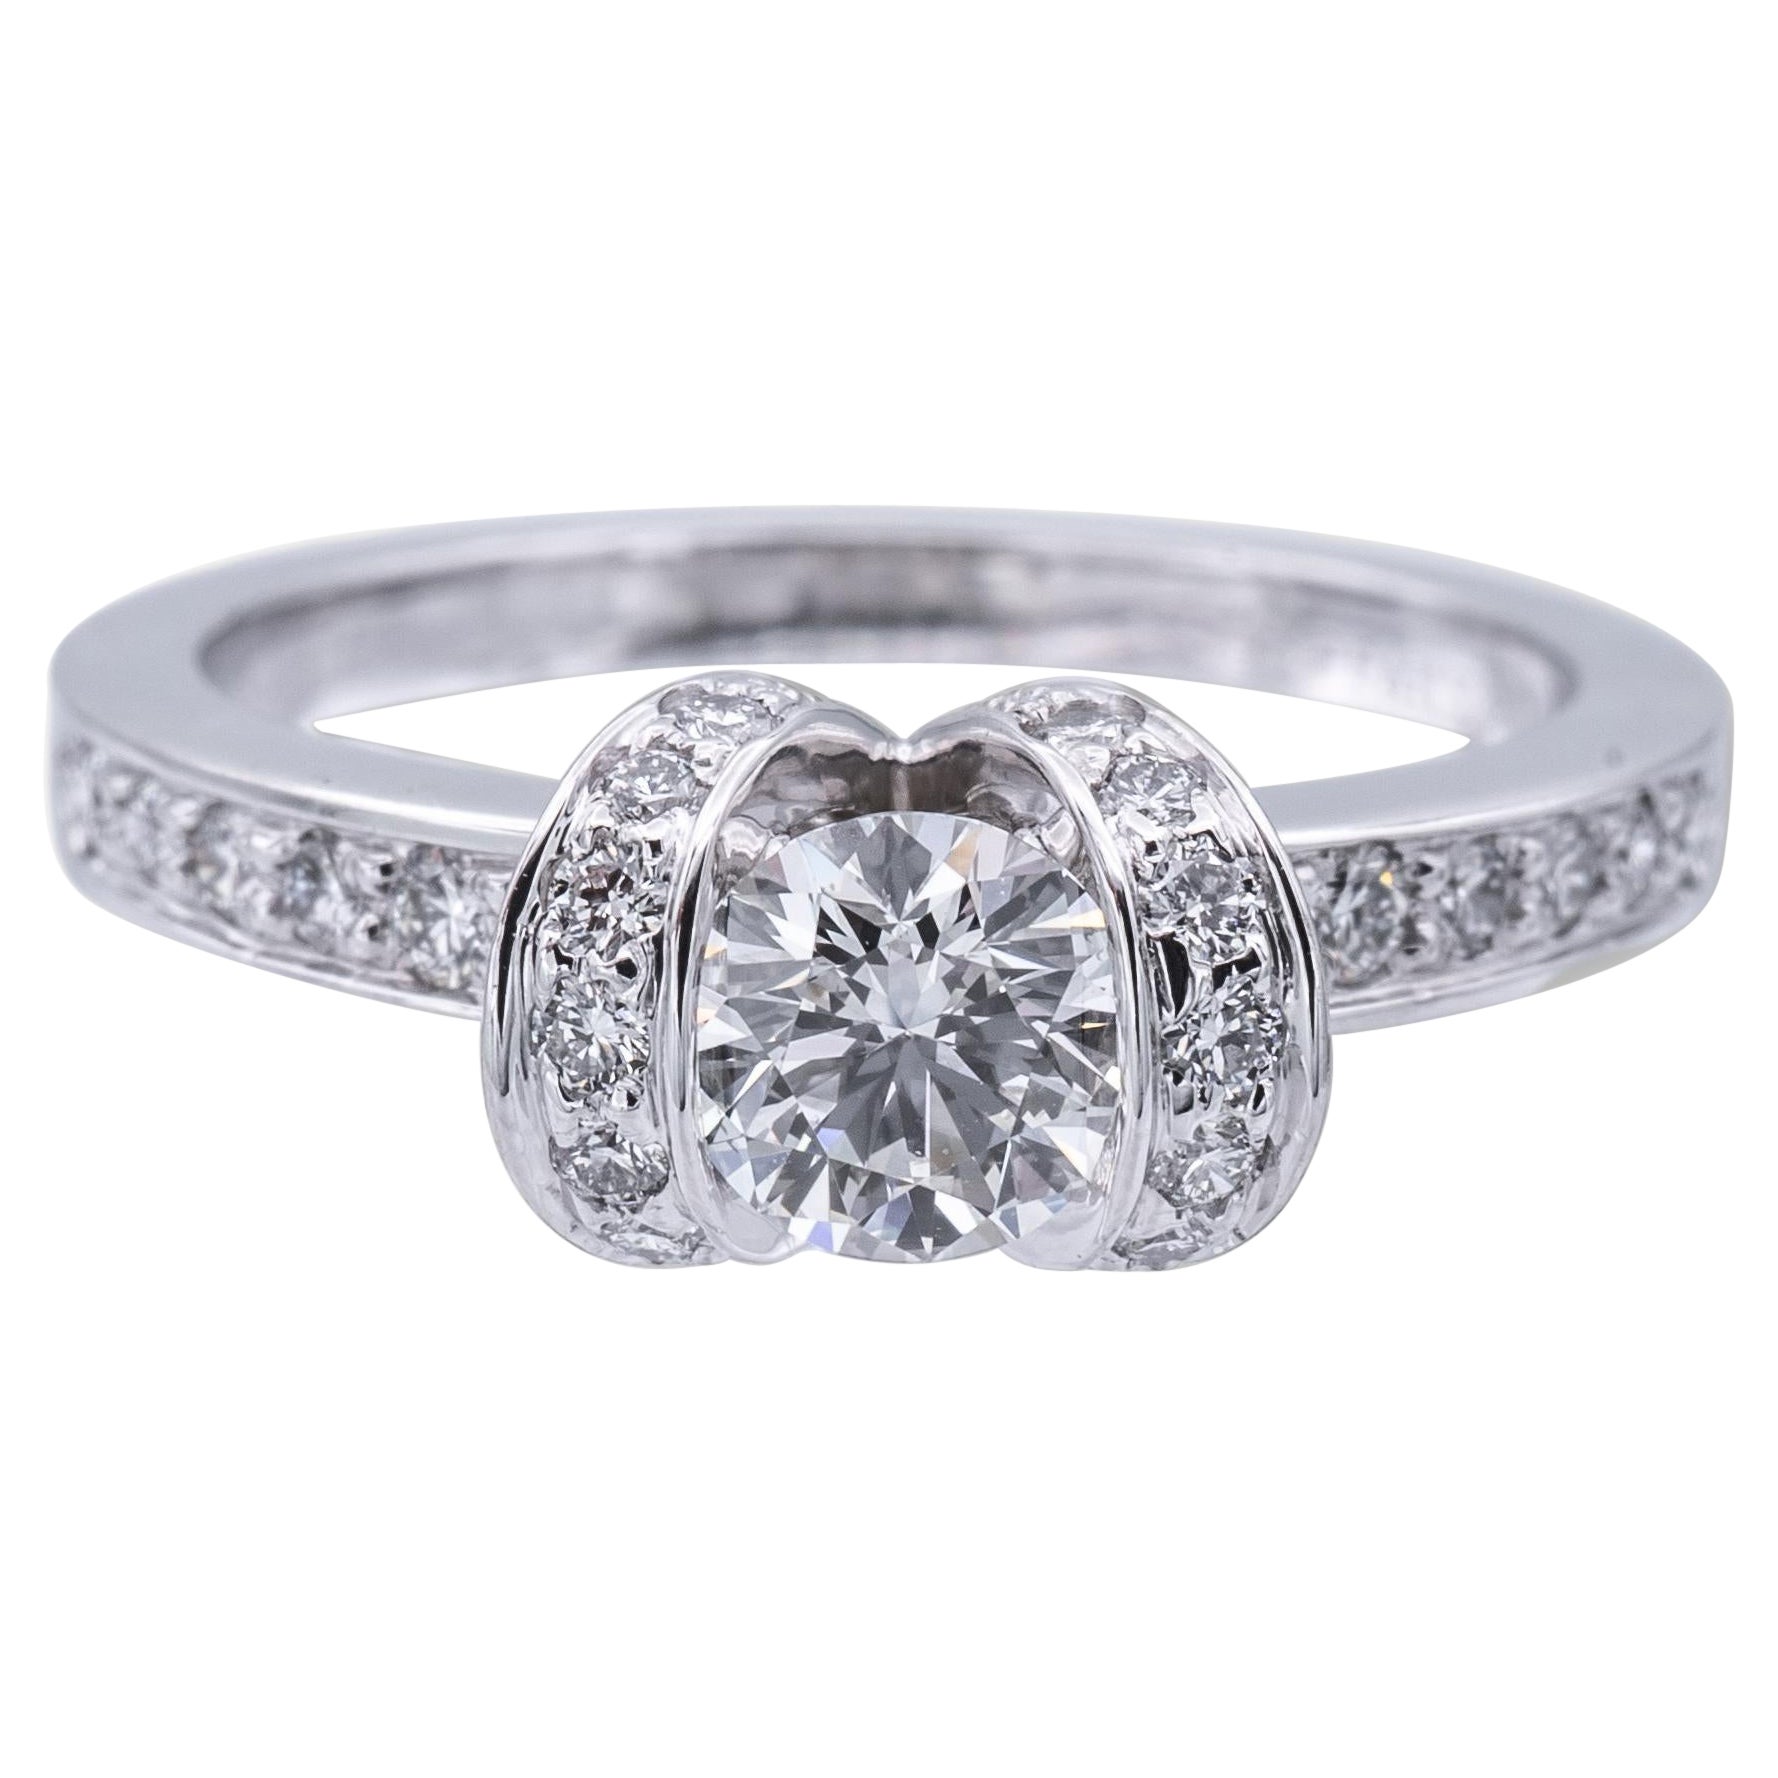 Tiffany and Co. Ribbon Platinum Diamond Engagement Ring .83ct Tw GVVS2 Round Cut